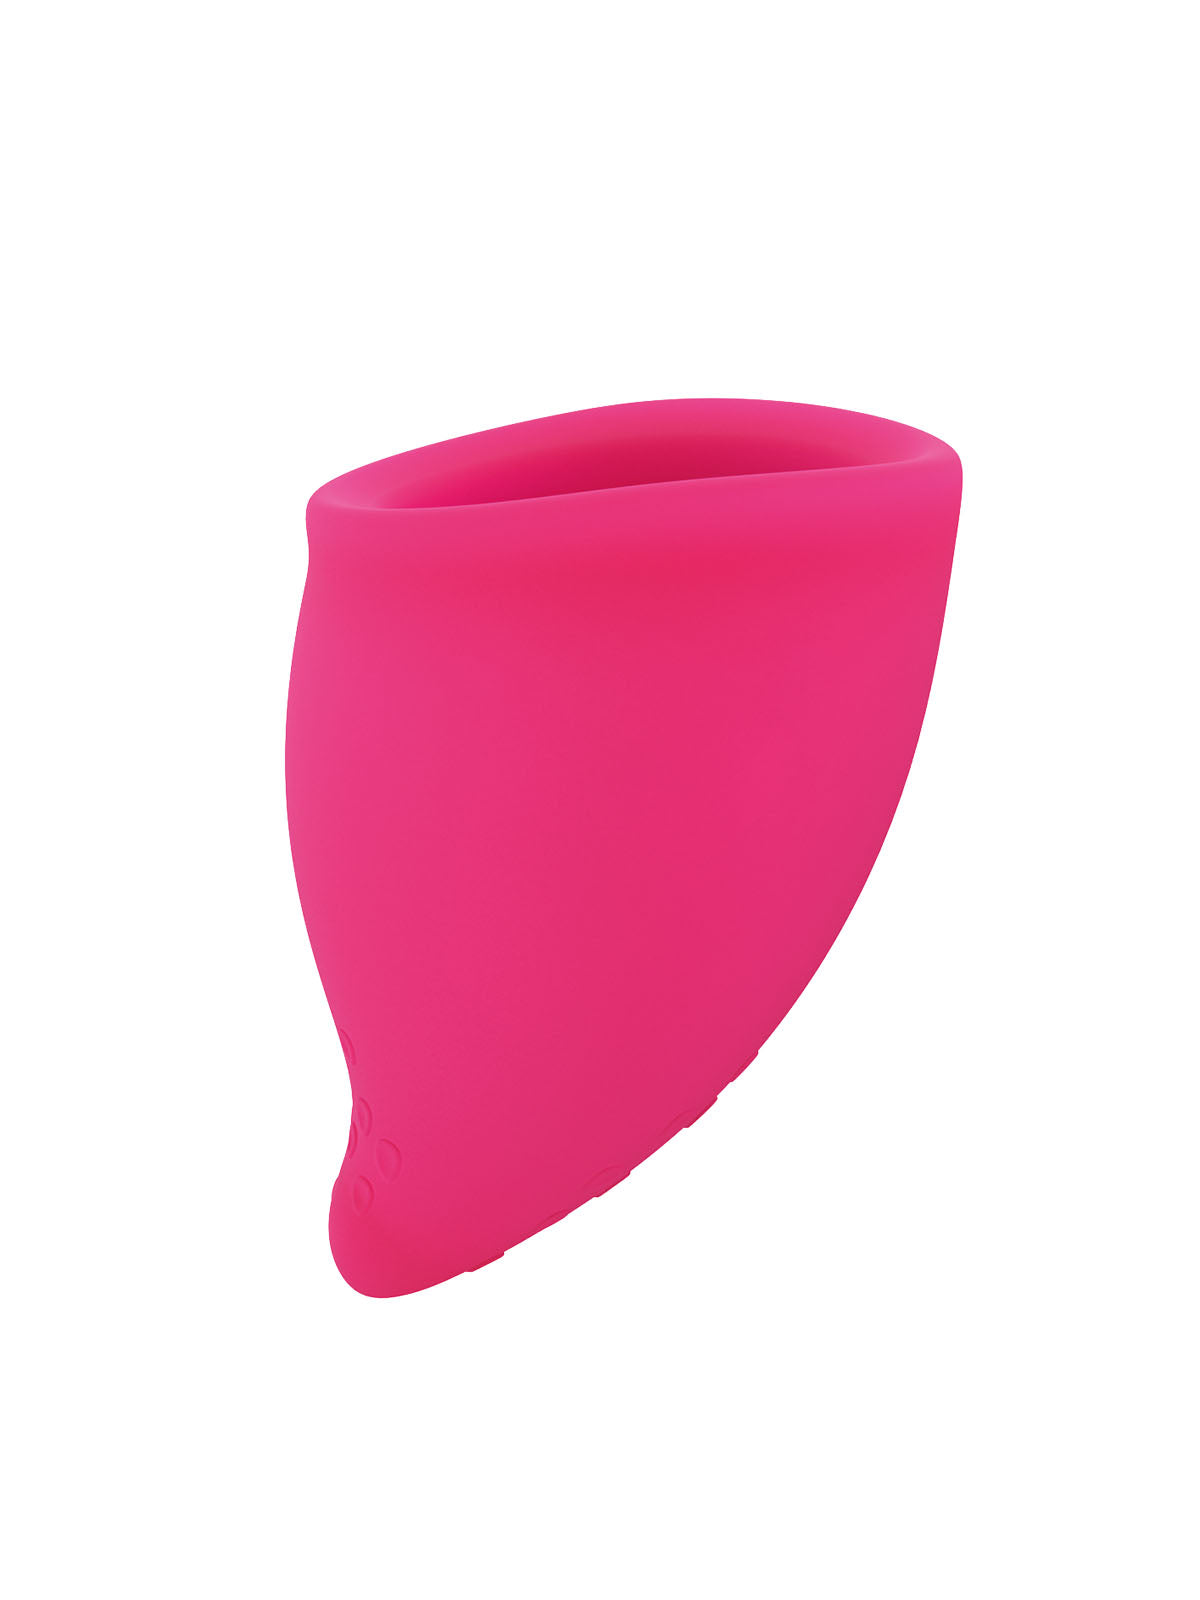 Fun Cup Explore Kit Pink Menstrual Cup